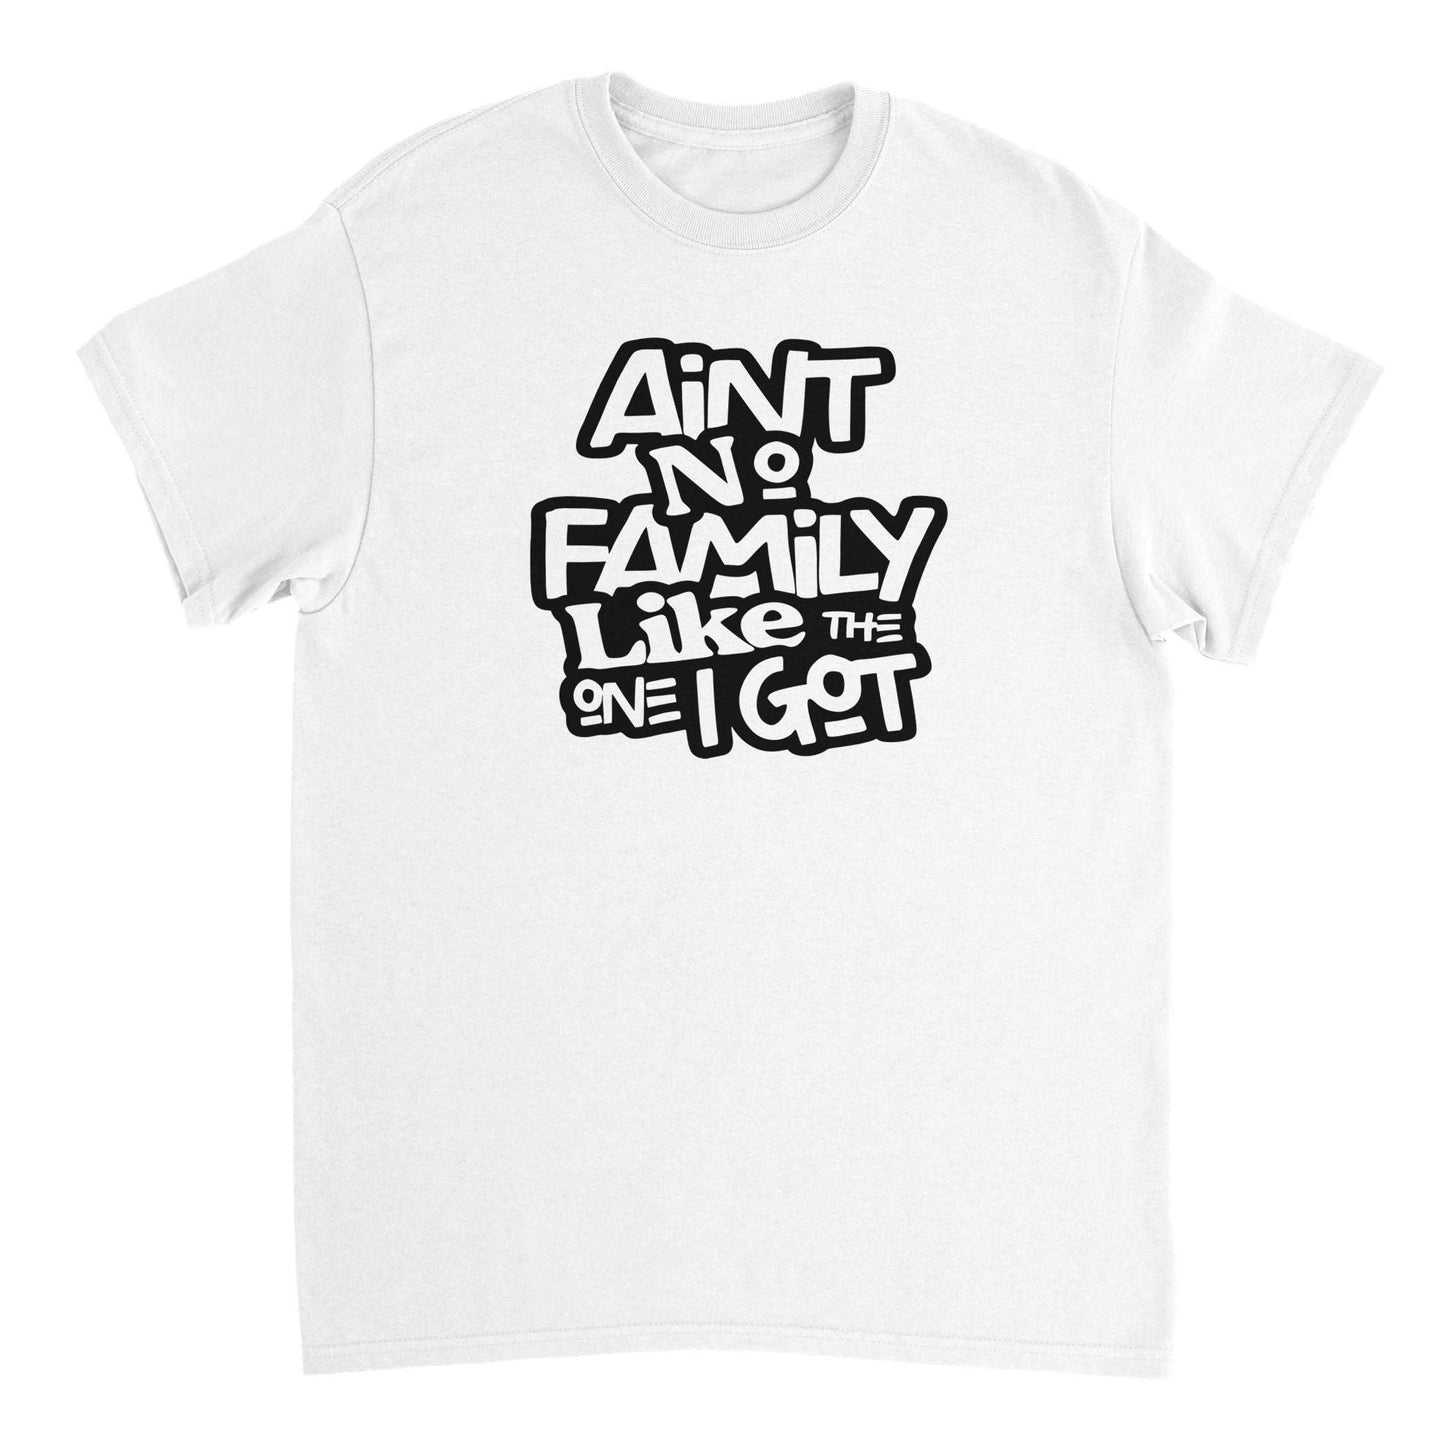 Ain't No Family Like the One I Got T-shirt - Mister Snarky's